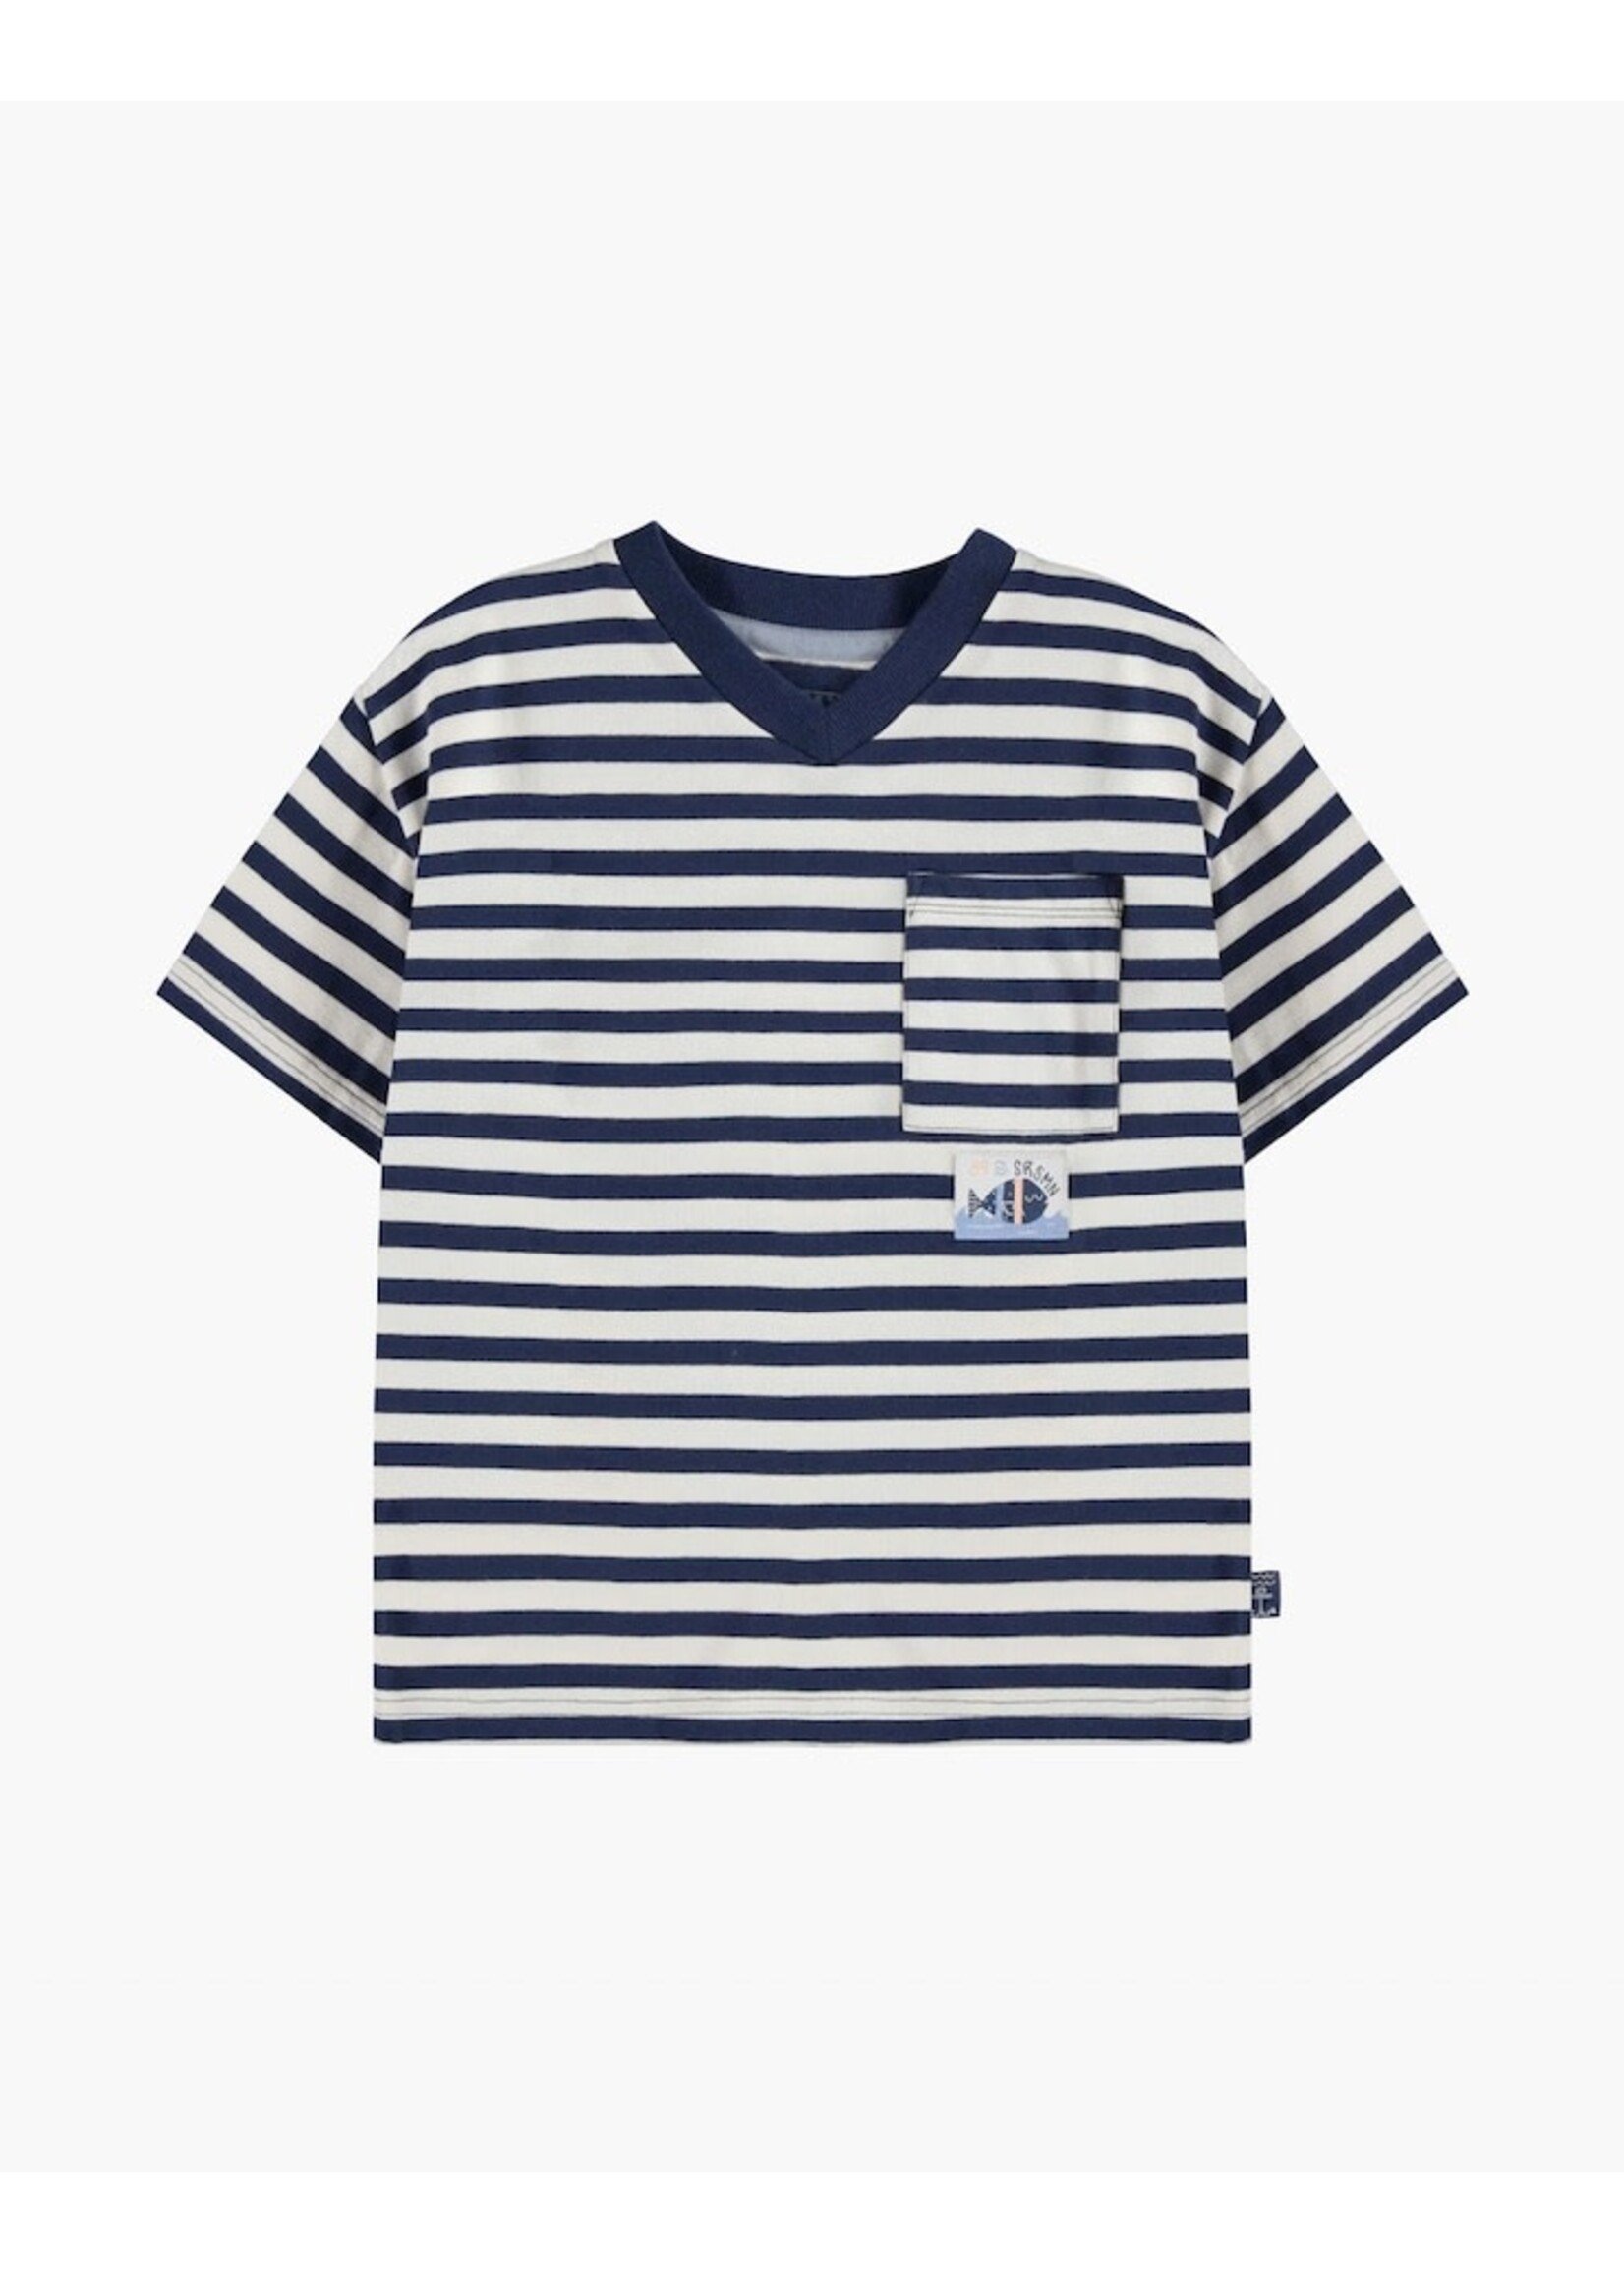 Souris Mini Souris Mini, Striped Short Sleeves Relaxed Fit T-Shirt || White / Navy